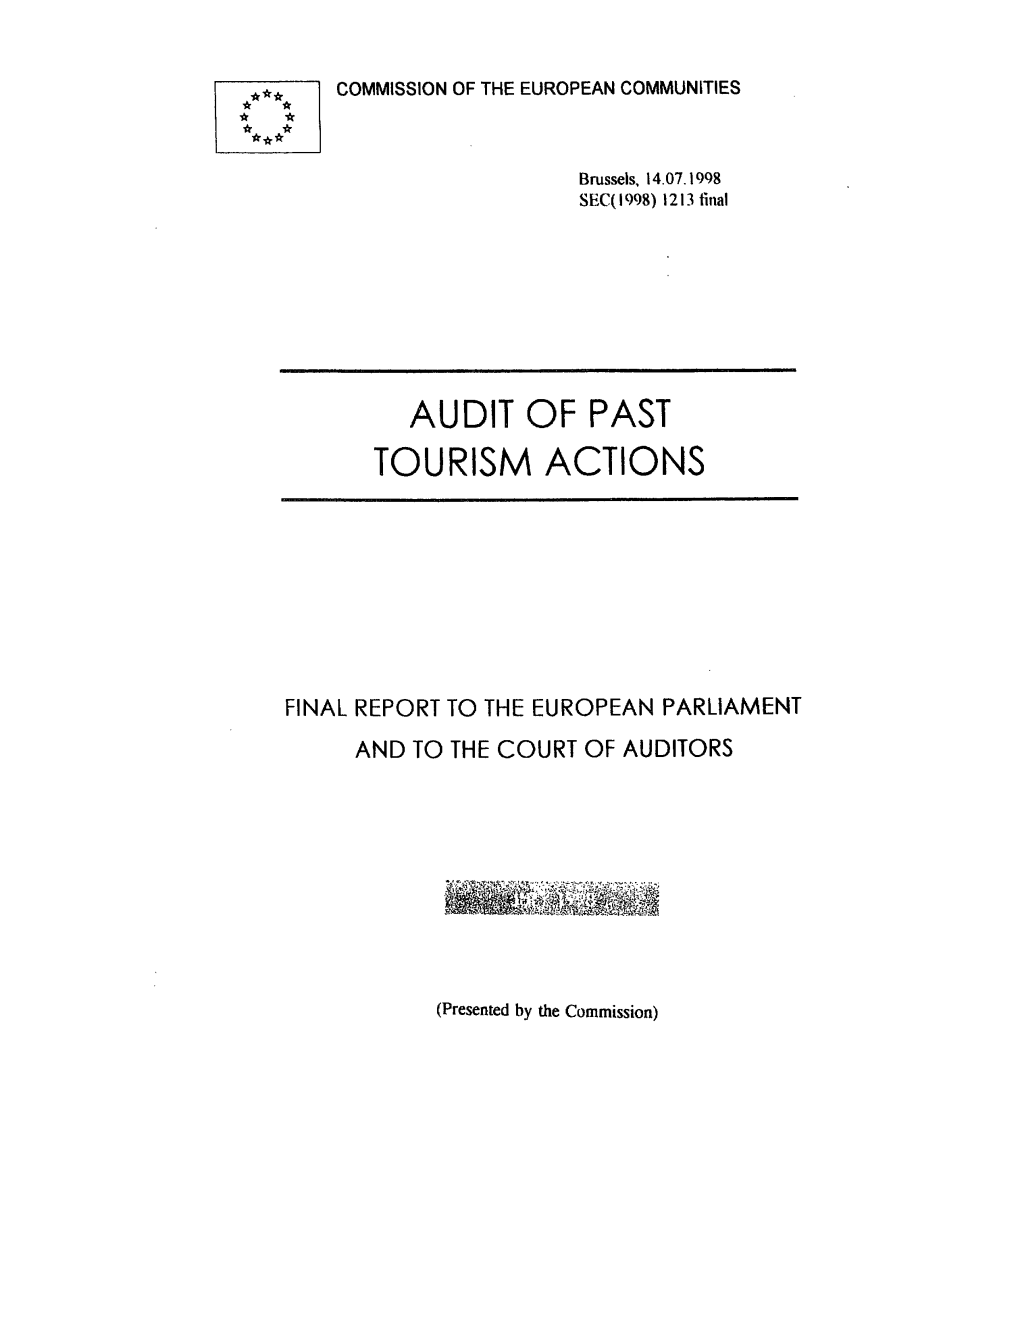 Audit of Past Tourism Actions